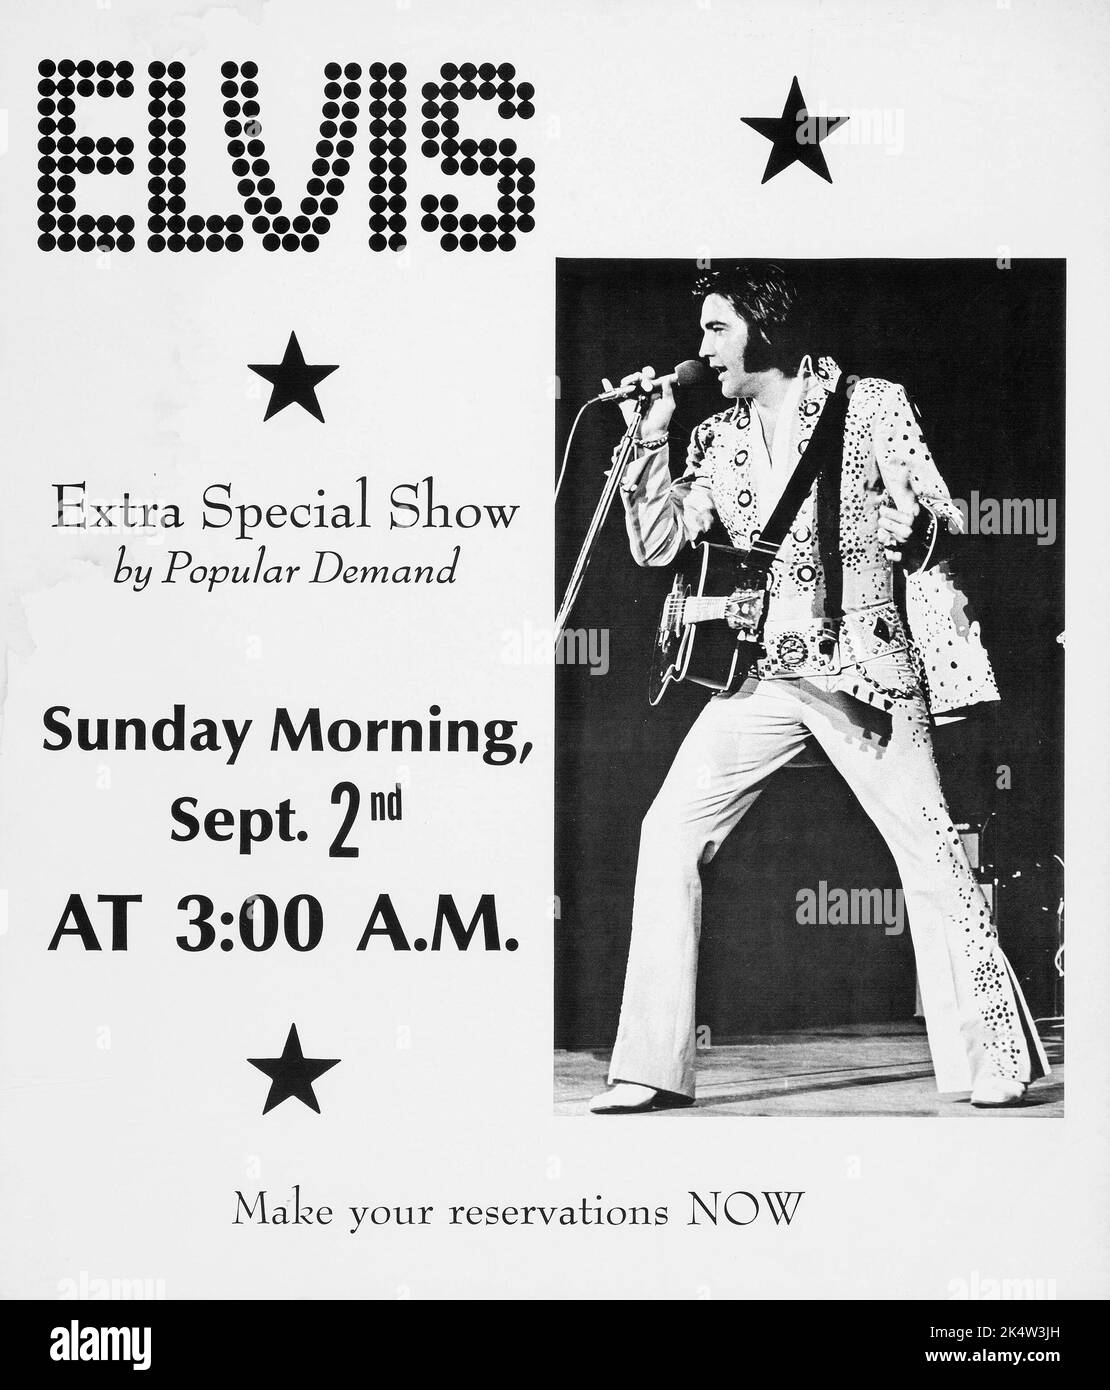 Elvis Presley - Sunday morning, Sept 2nd - 3-00 AM Concert Poster (1973) Stock Photo